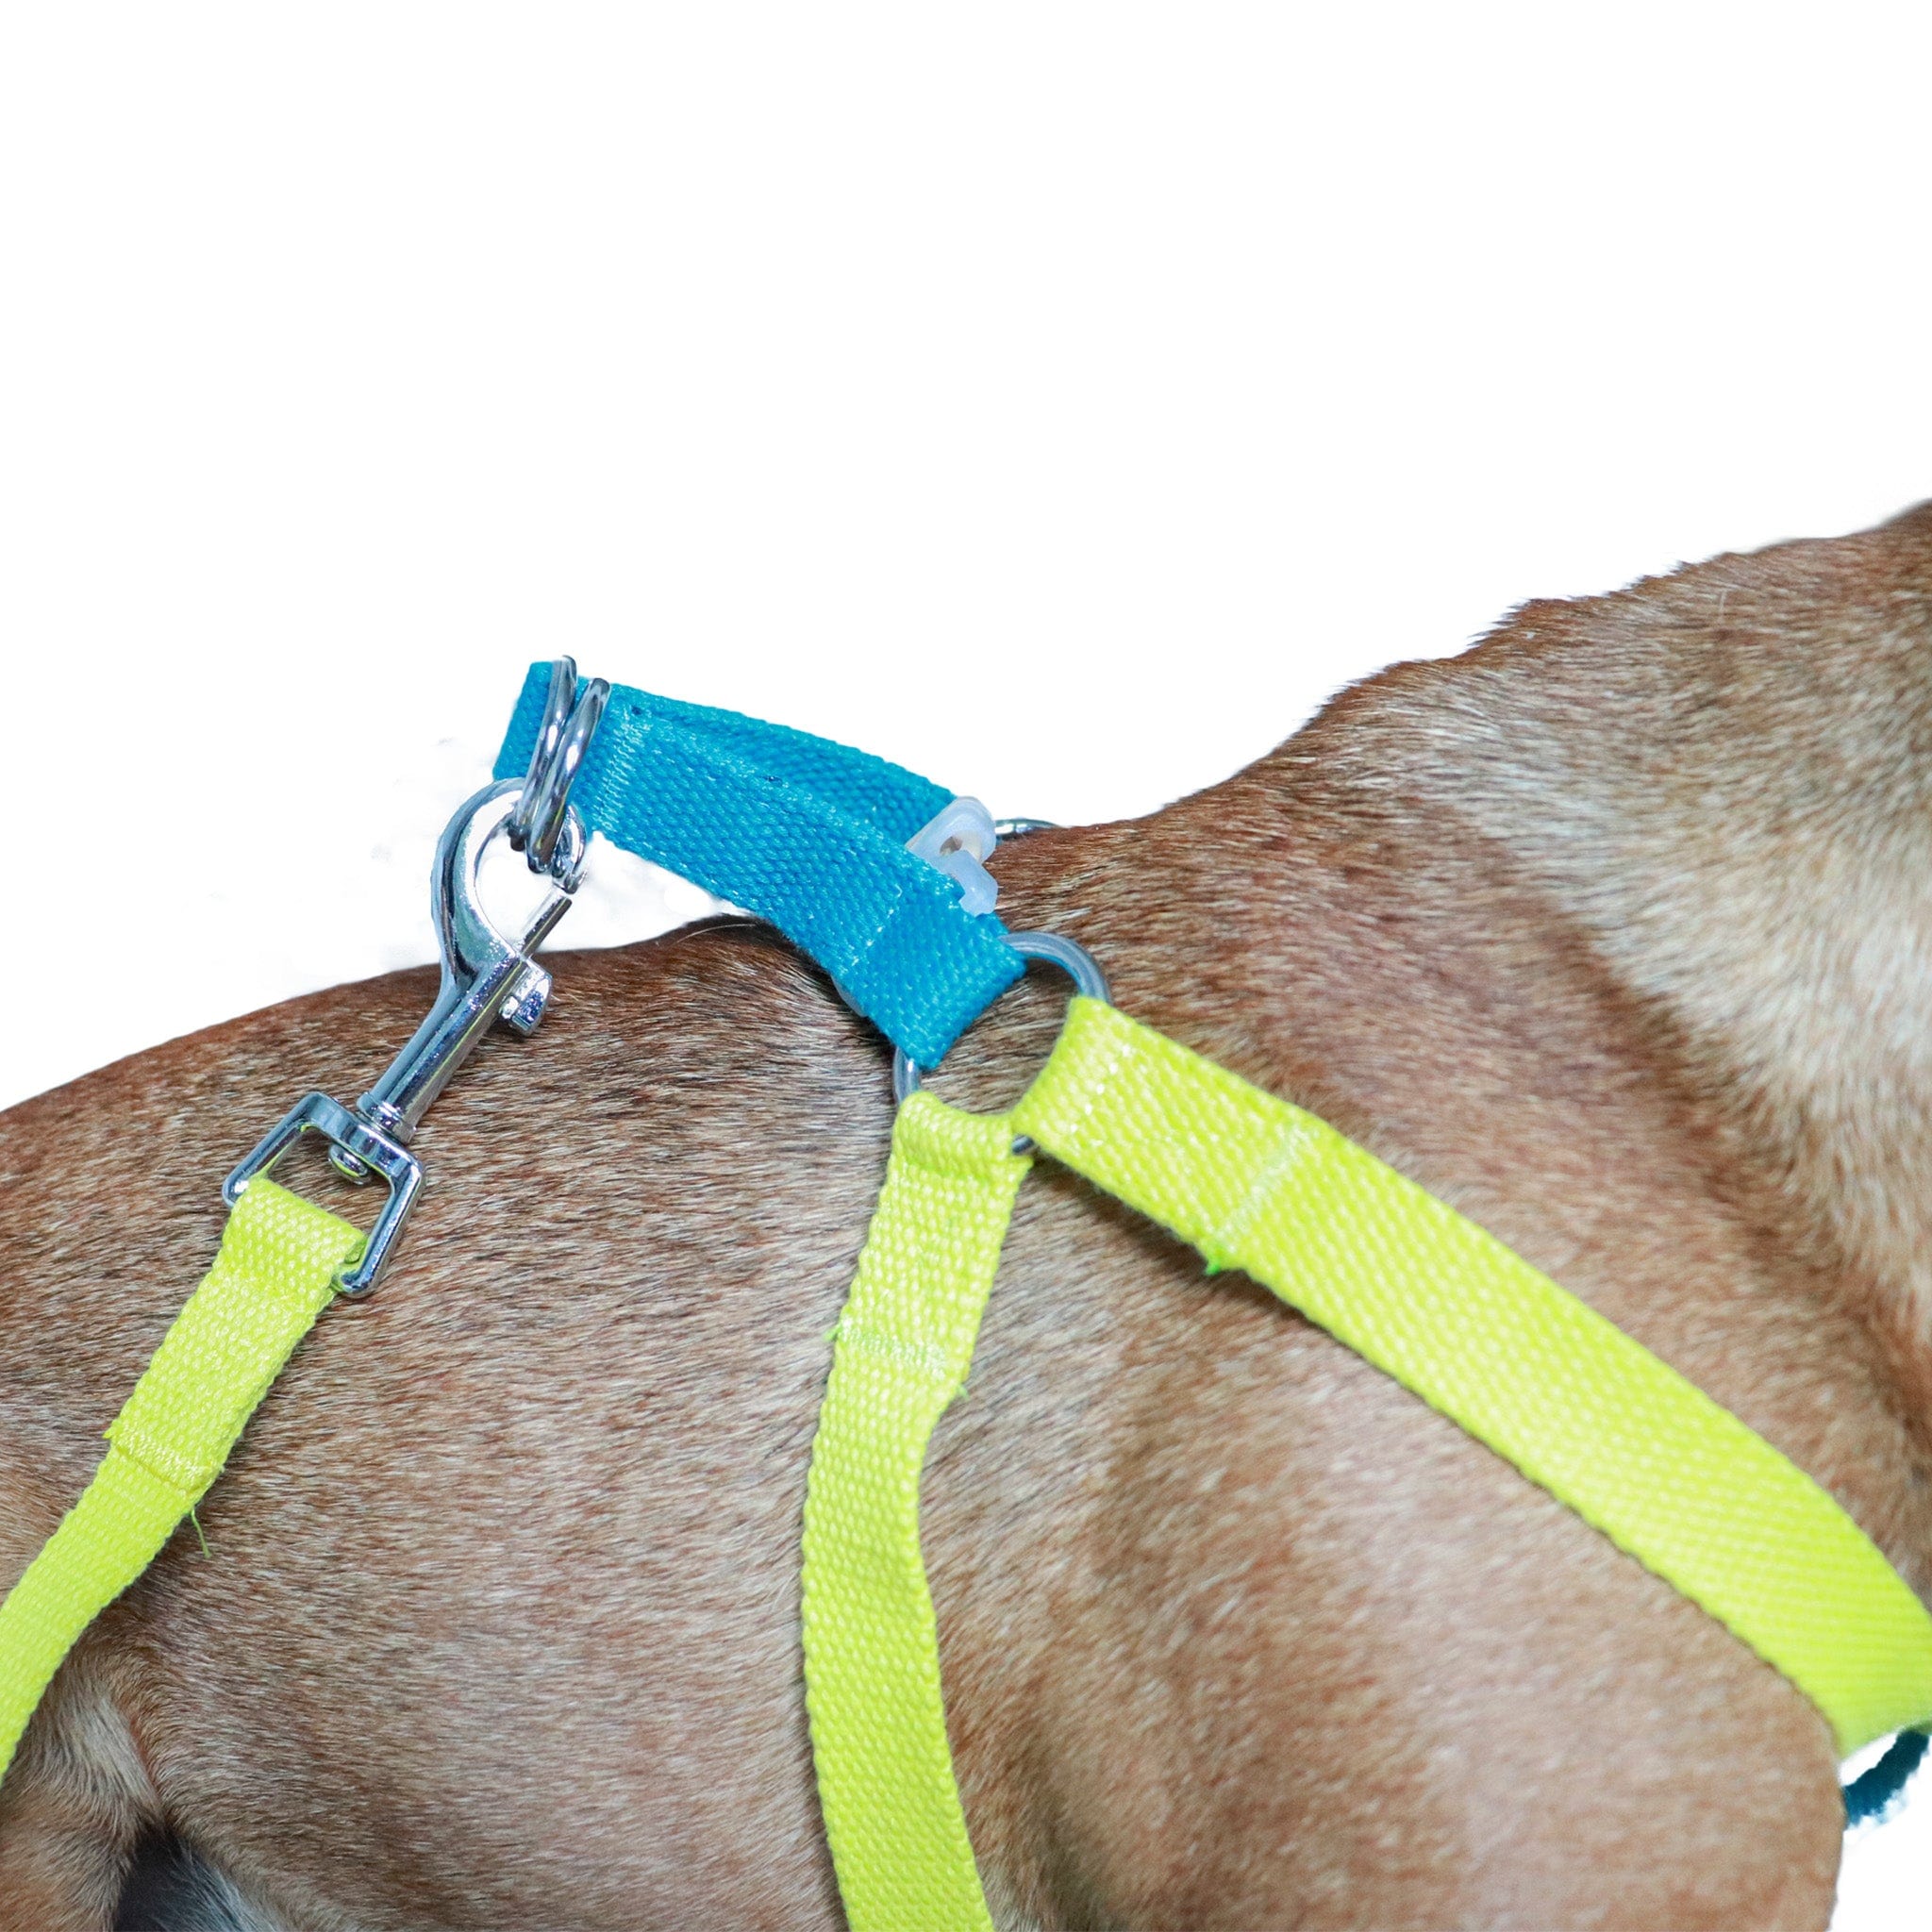 Color Combo French Bulldog Harness & Leash Set - Yellow & Purple